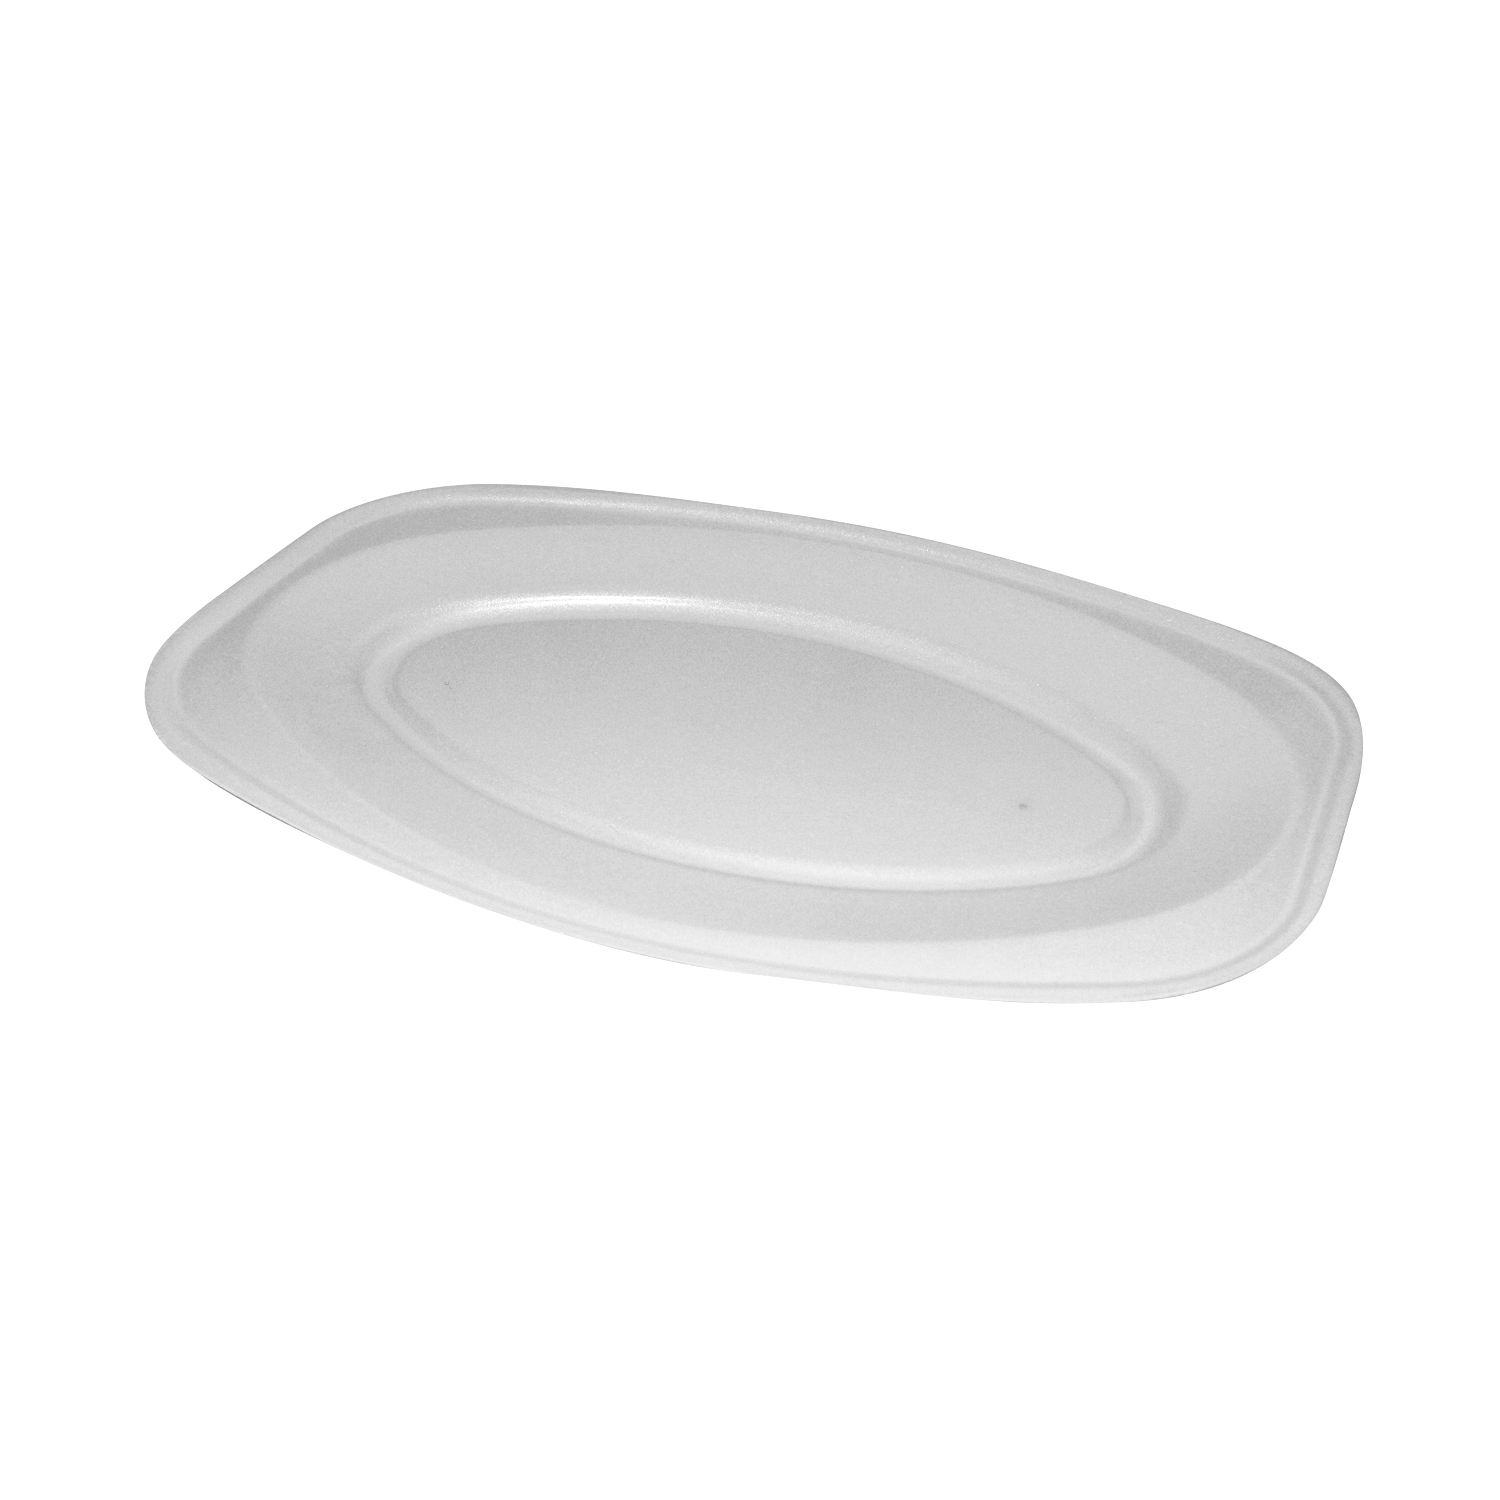 Party-Platte (XPS) oval weiß 55 x 36 cm - 10 Stück